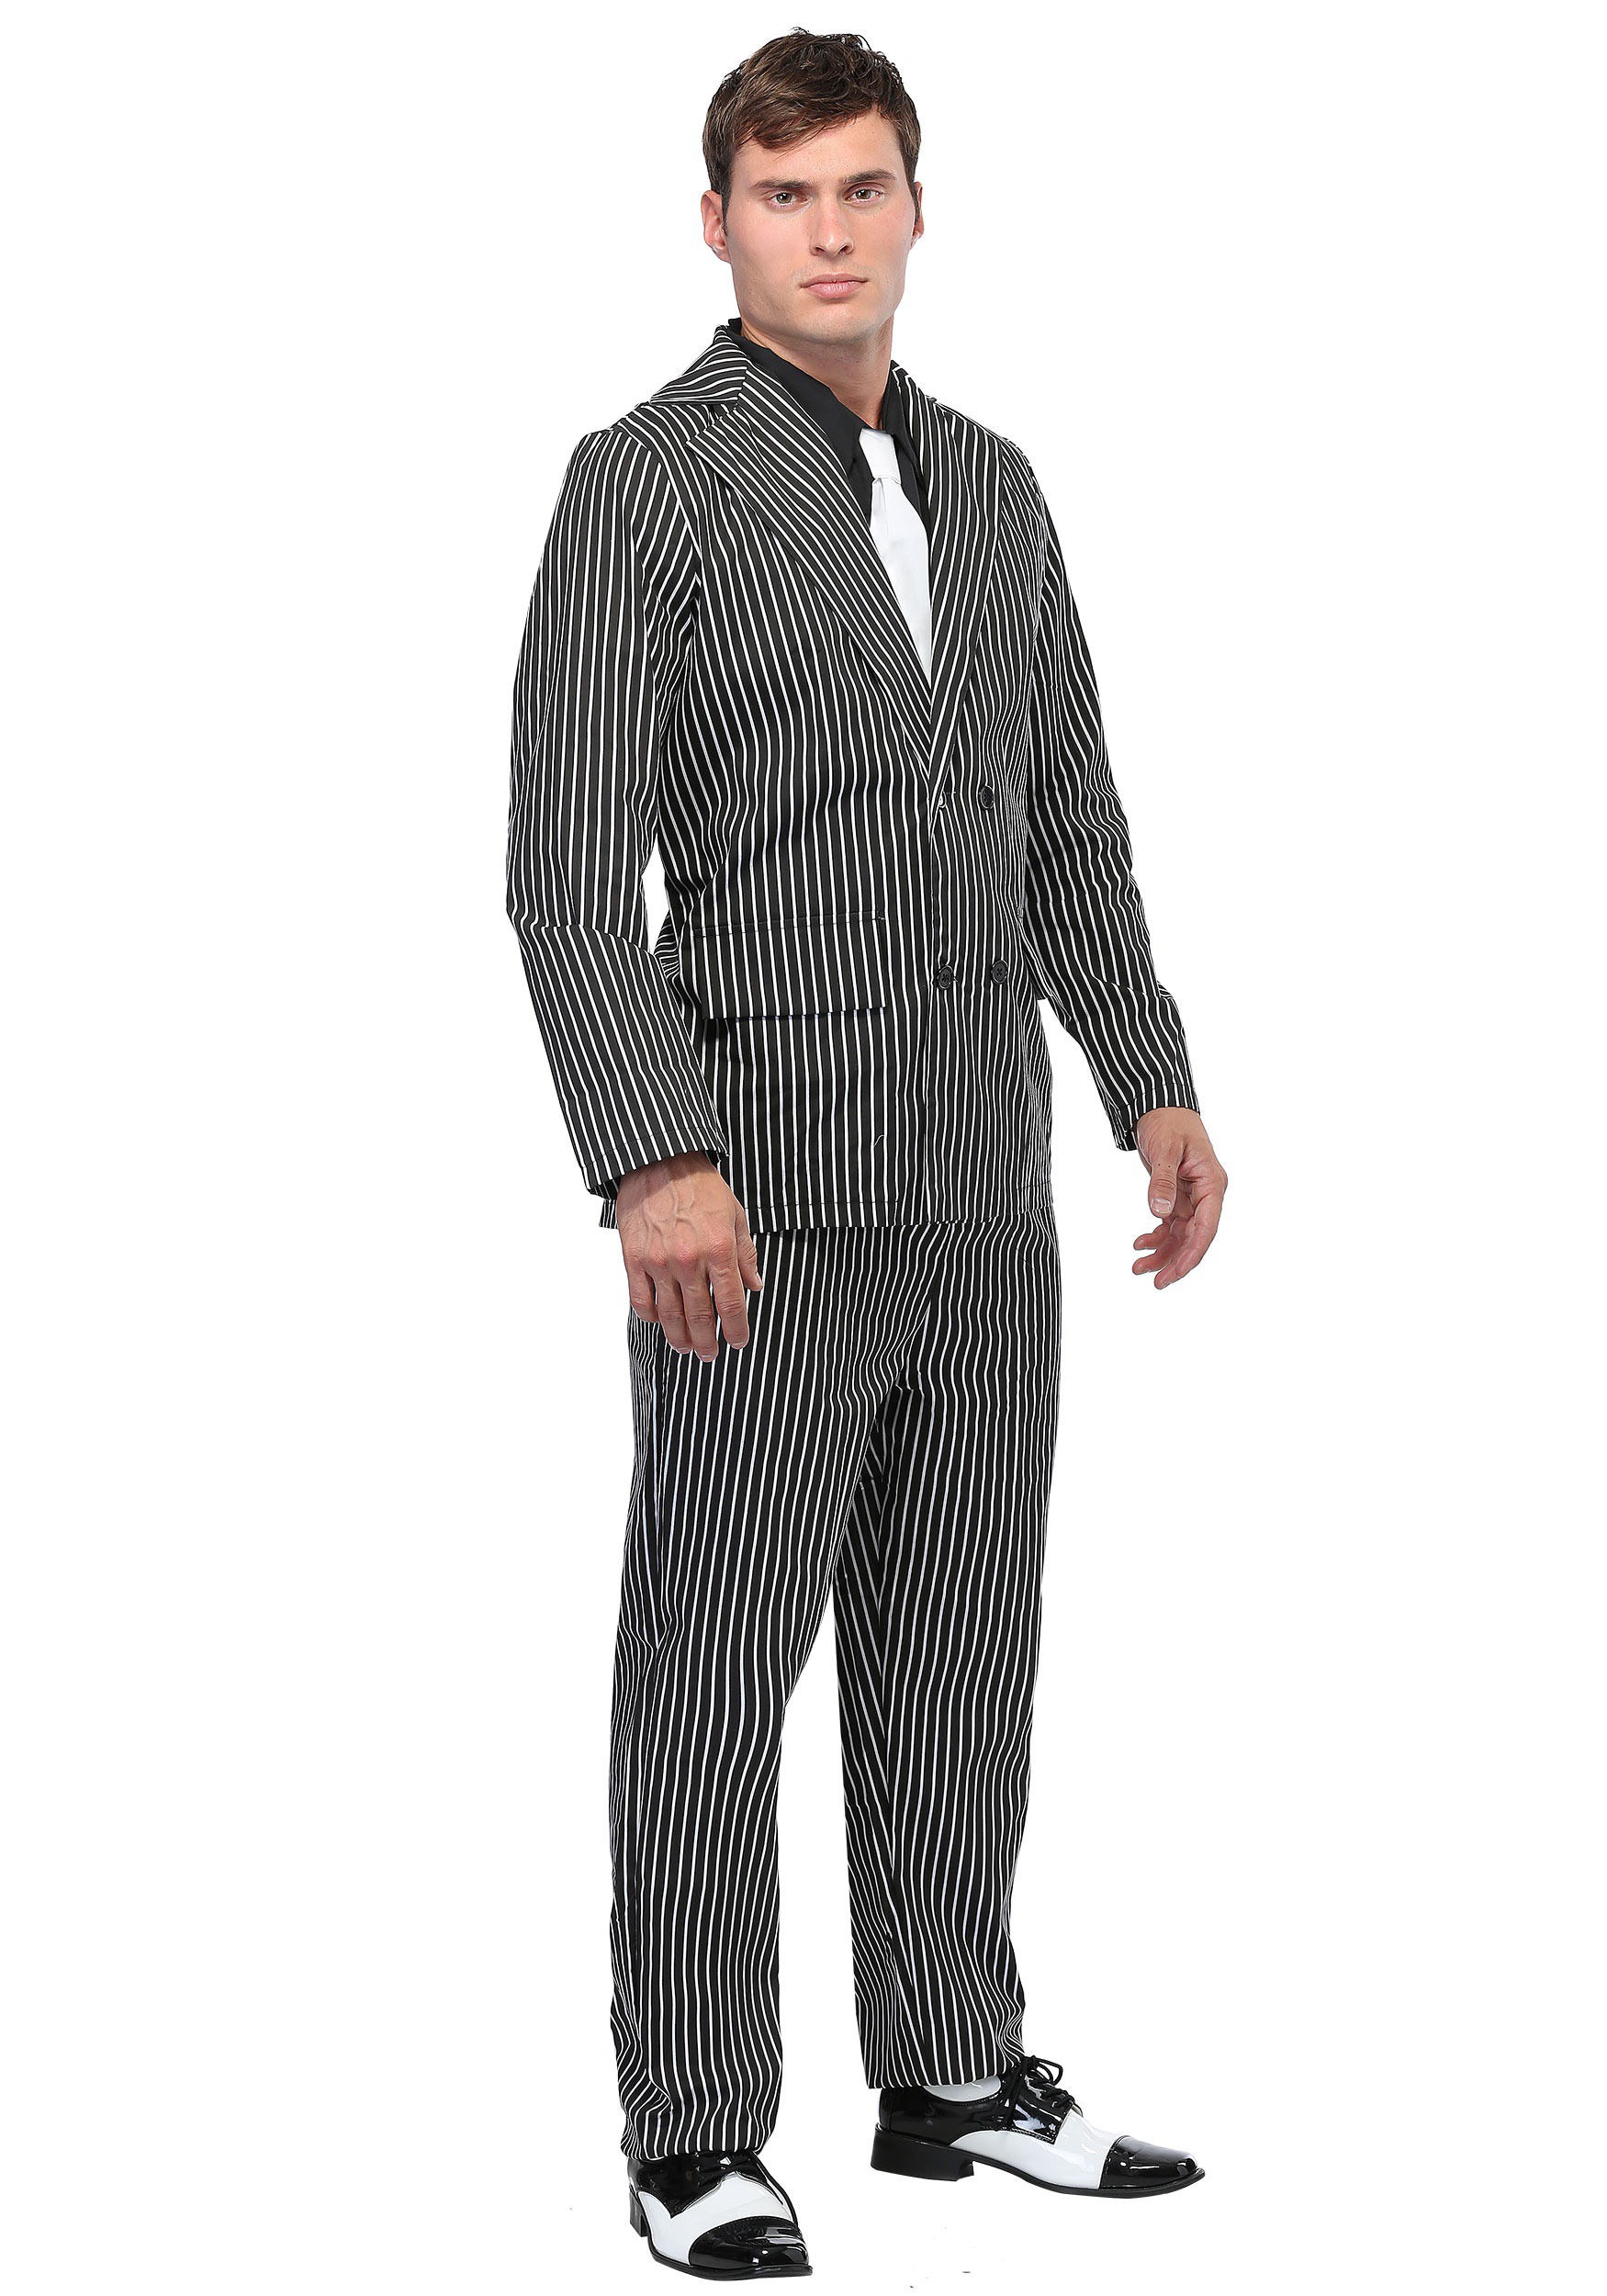 Photos - Fancy Dress Wide FUN Costumes  Pin Stripe Gangster Costume for Men Black/White FUN2 